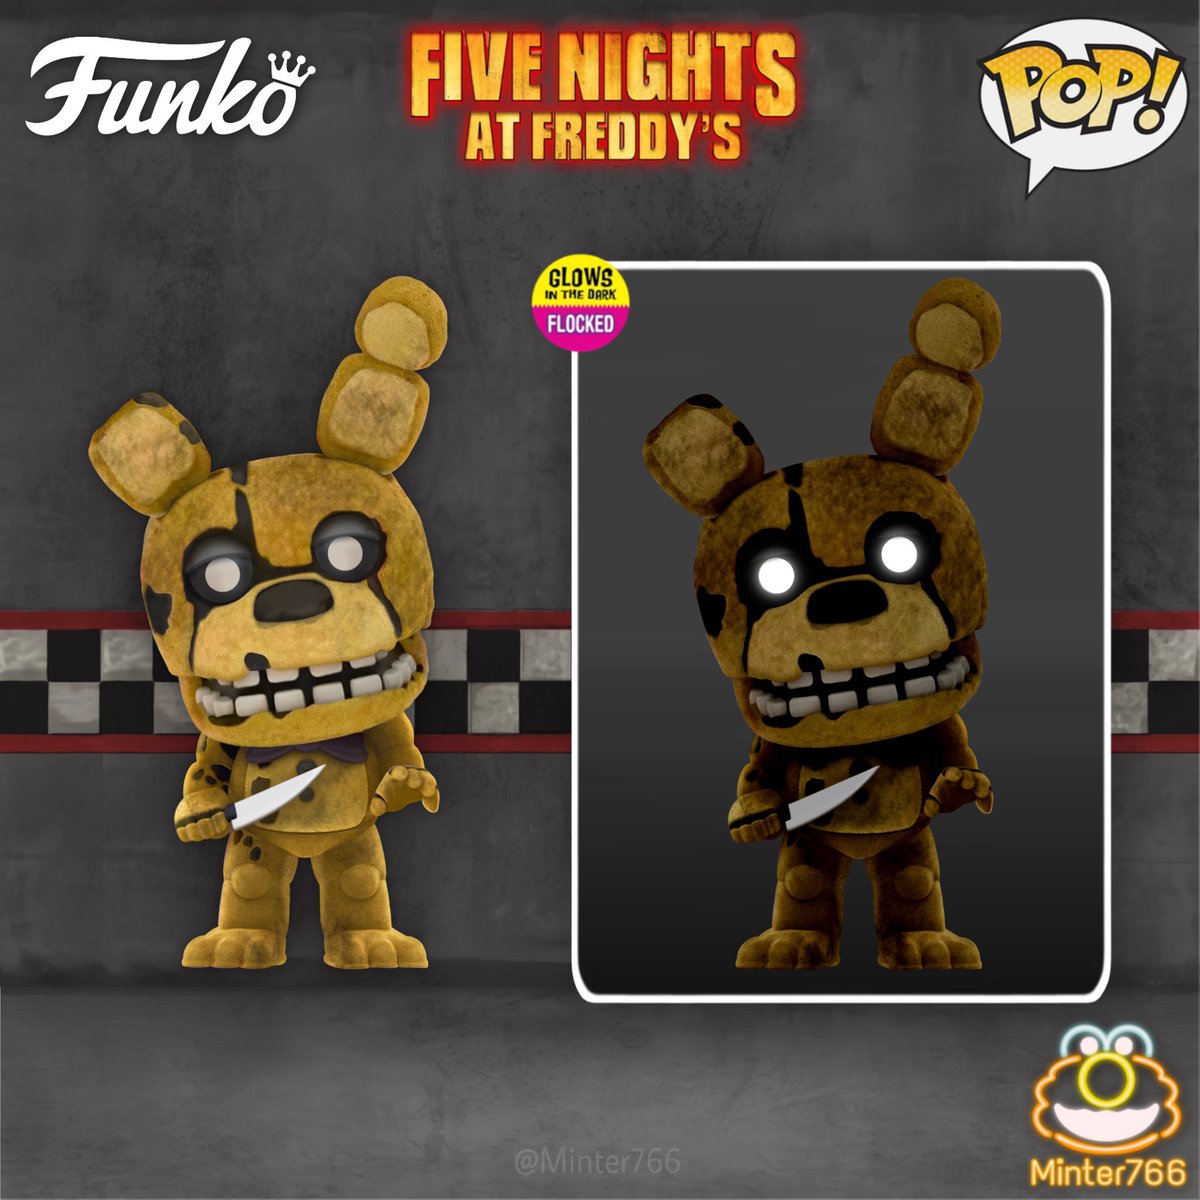 Withered Animatronics - Five Nights at Freddy's 2, Funko Pop Concept. • •  • • #fnaf #fivenightsatfreddys #freddyfazbear #goldenfreddy…